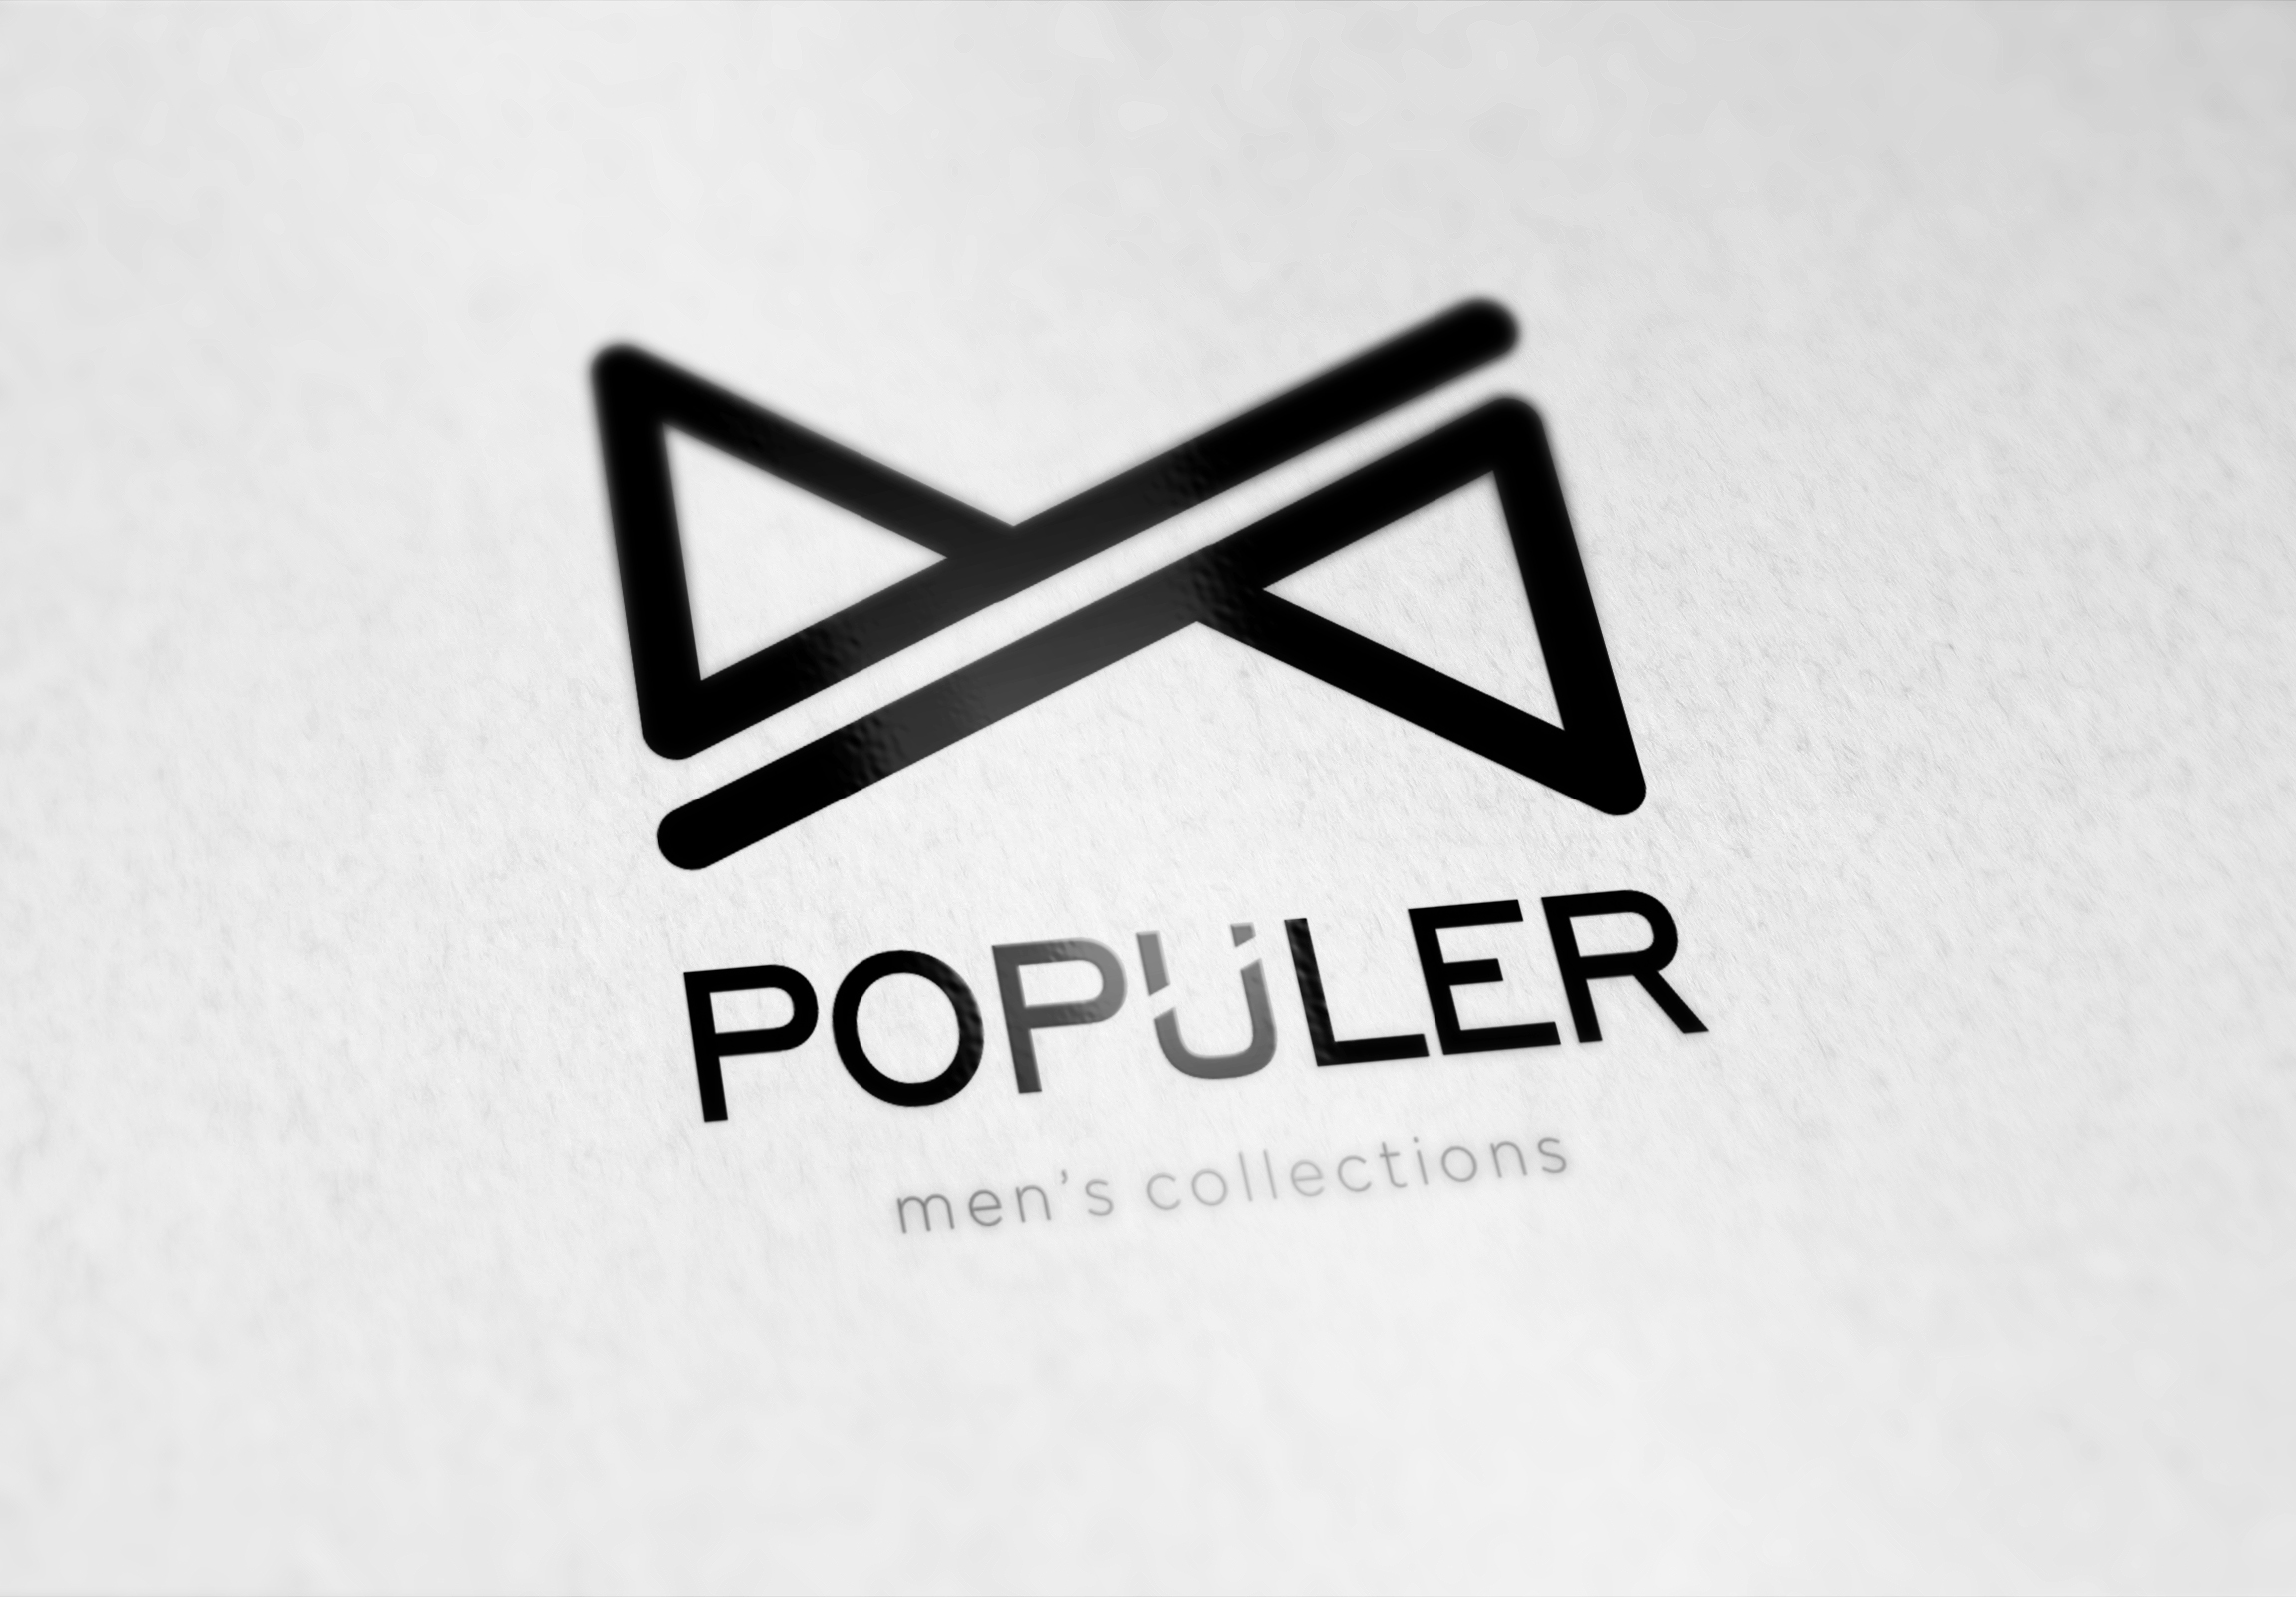 Populer men’s collection